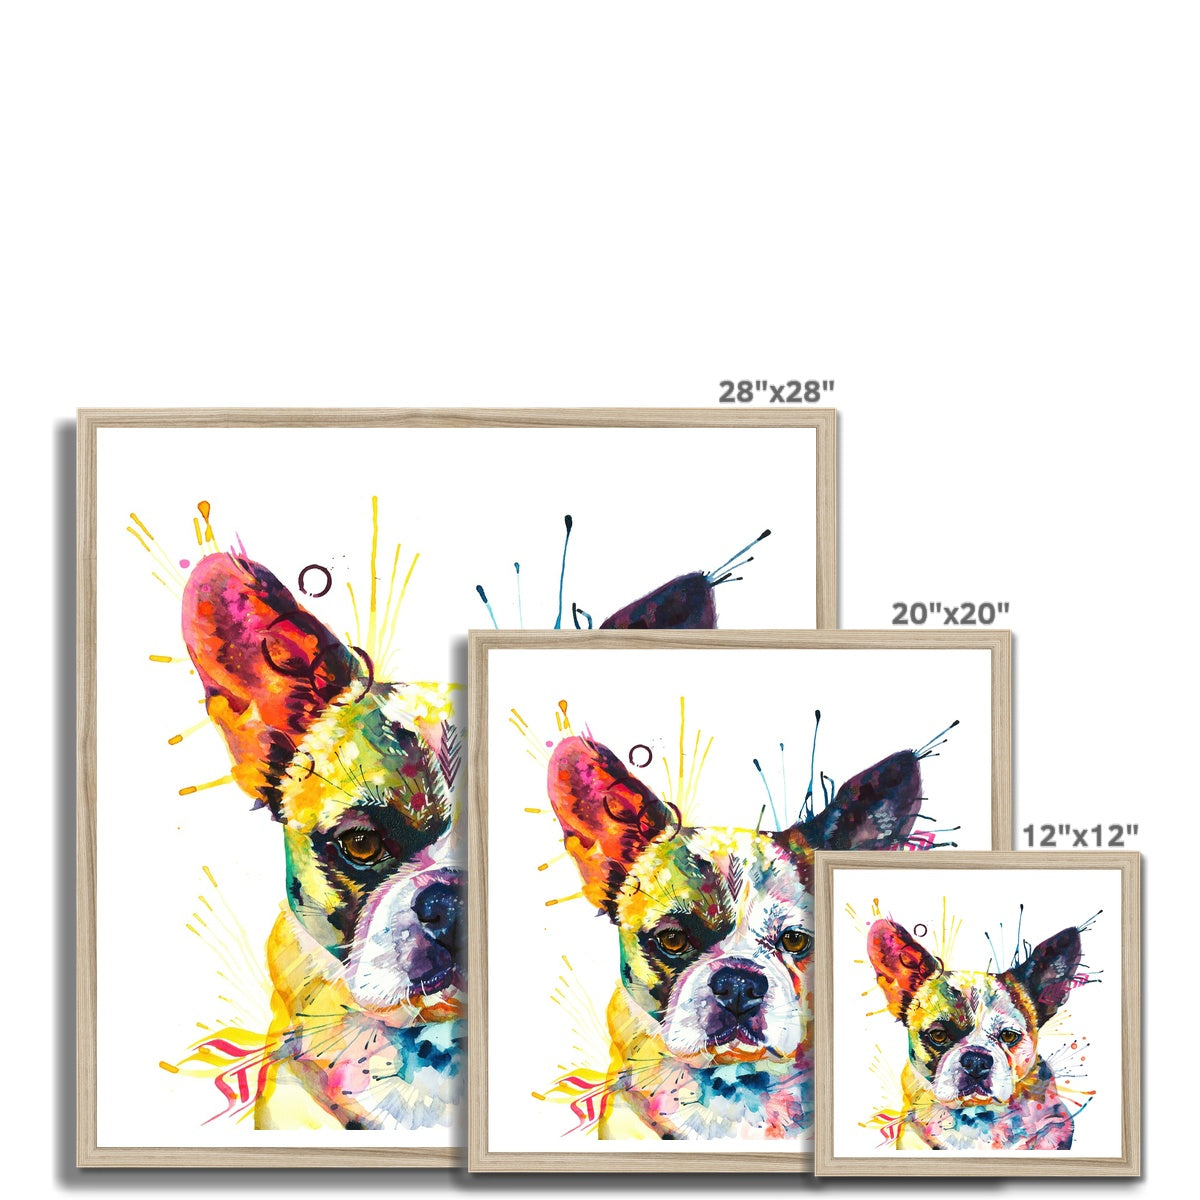 Dog Drawings | Dog Portrait | Pet Portrait Artists | Dog Portrait | Pet Portraits | Art Commissions | Framed Prints | Wall Prints | Living Room Wall Art